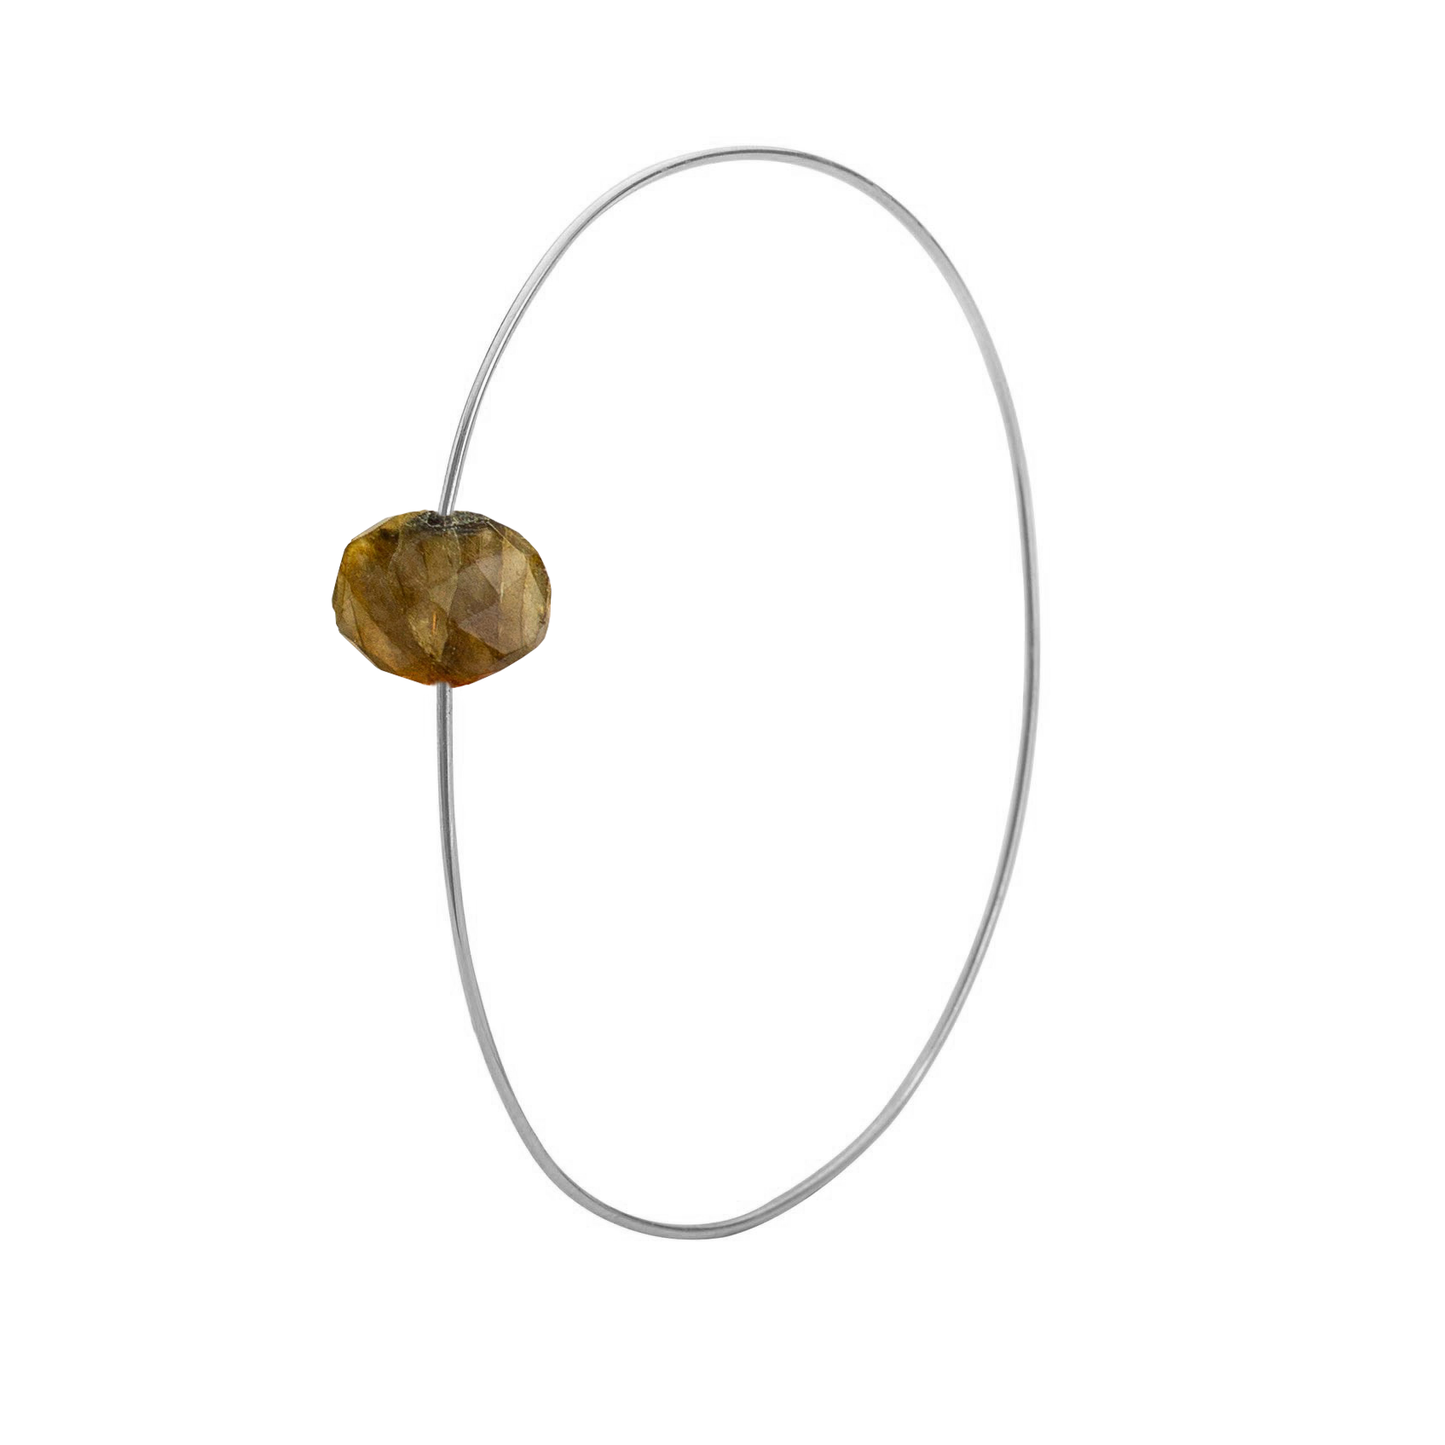 Oval Bangle with hand-cut precious gemstones